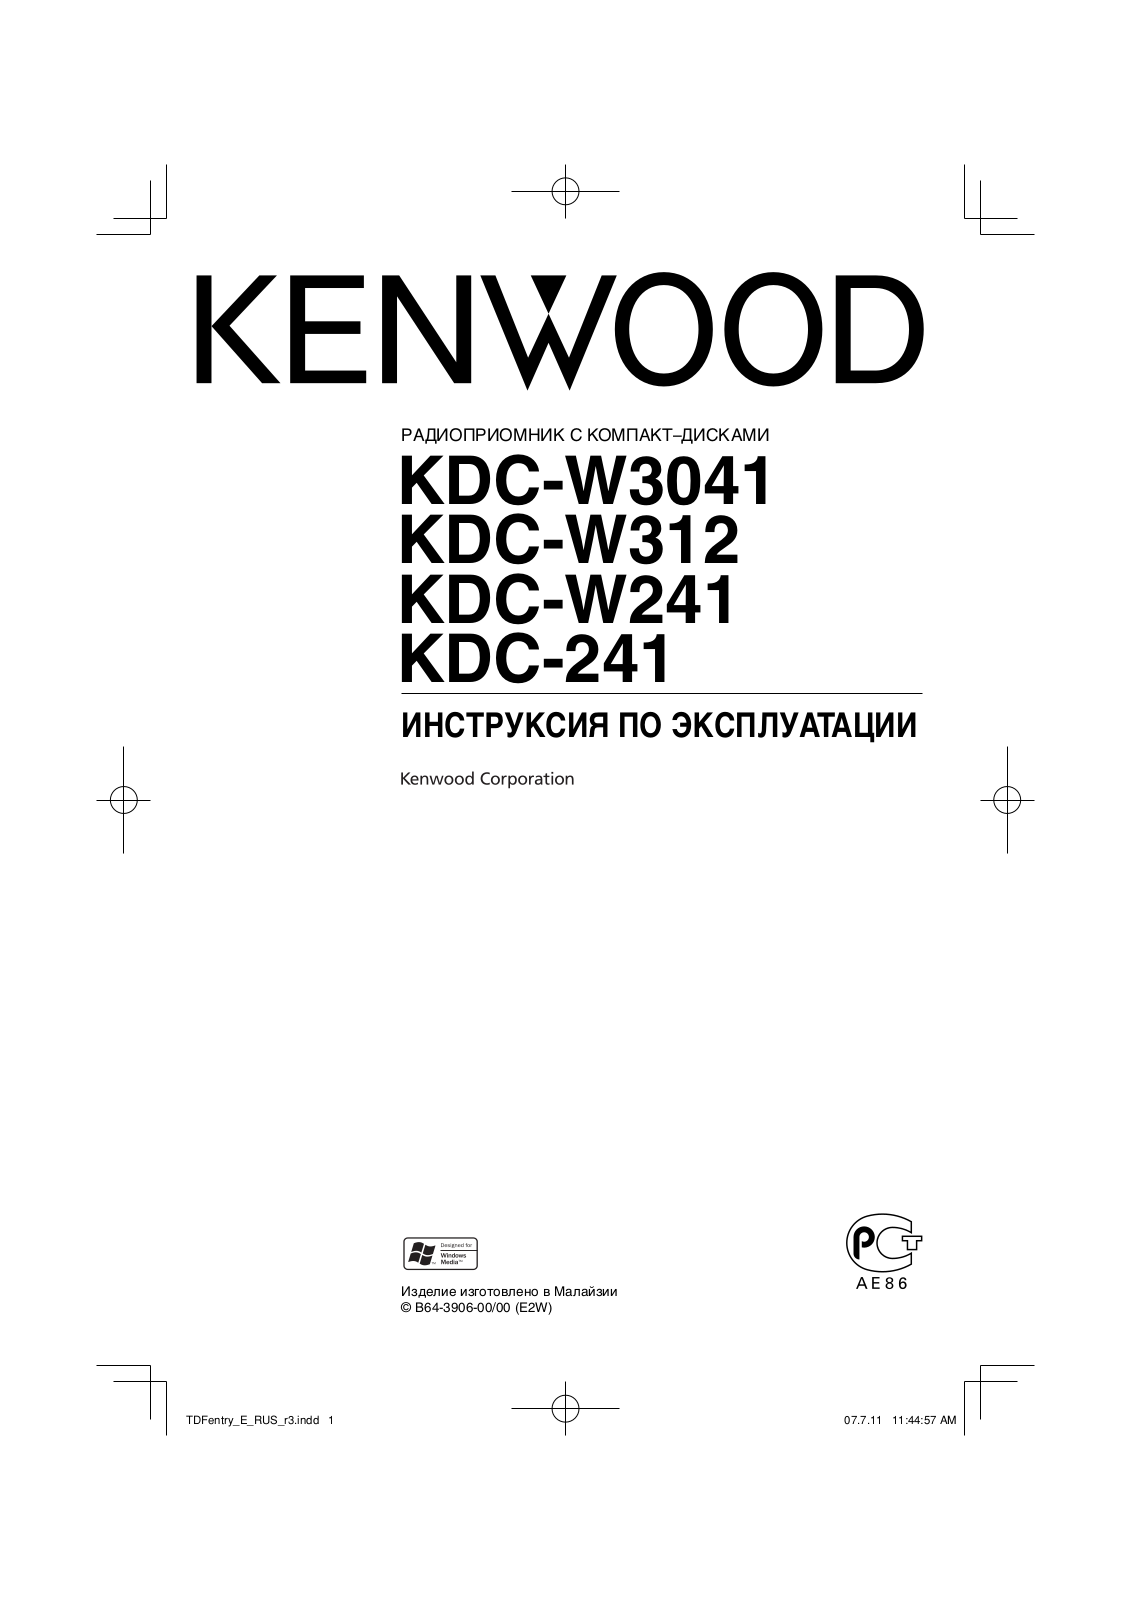 Kenwood KDC-W241GY User Manual